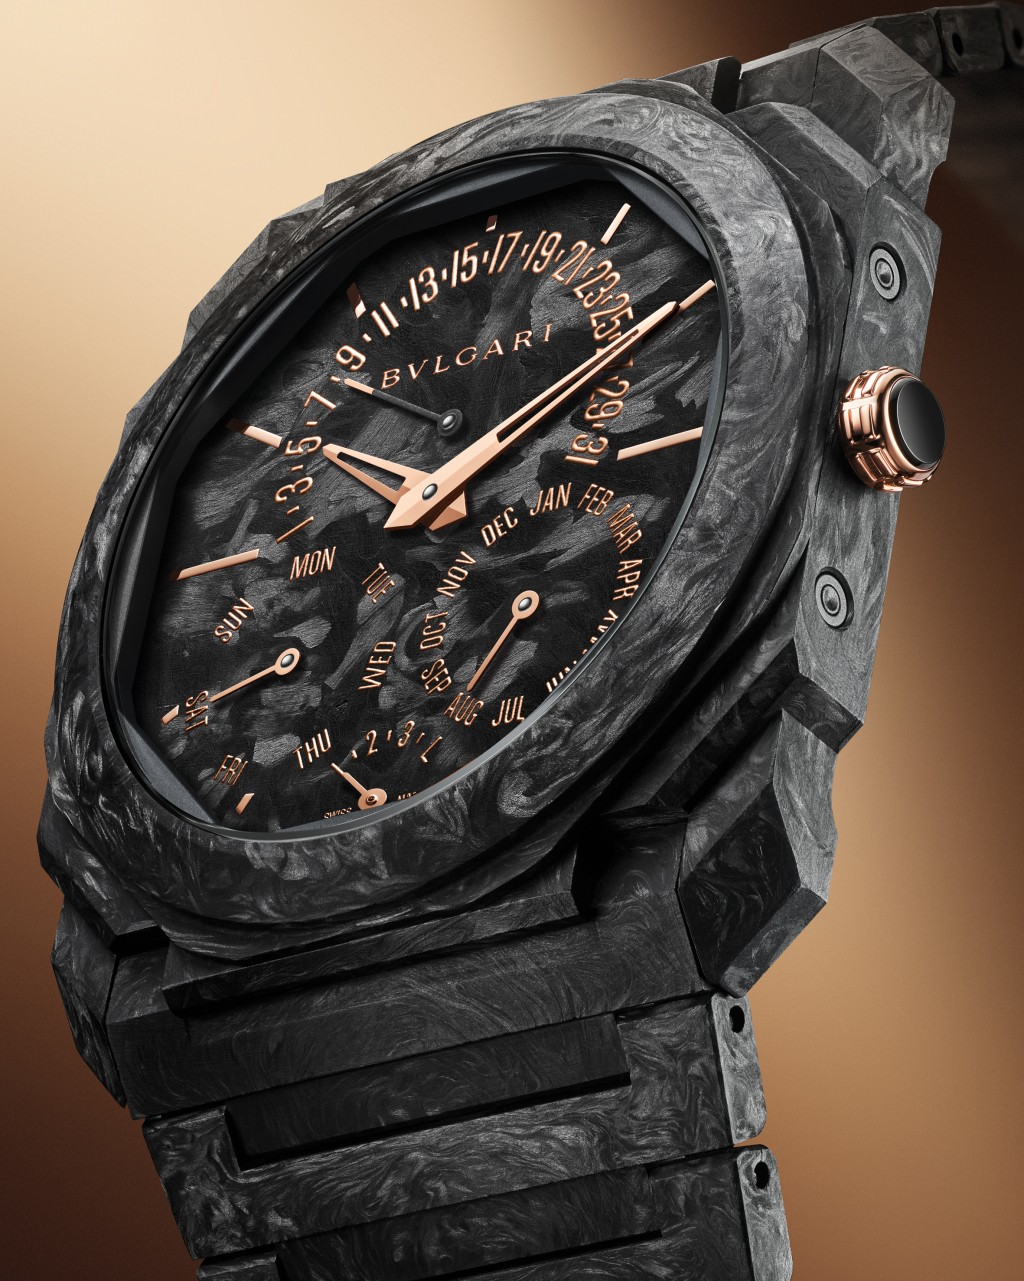 Bvlgari为2021年世界纪录的超薄万年历腕表，追加充满贵气又型格的碳金版本。